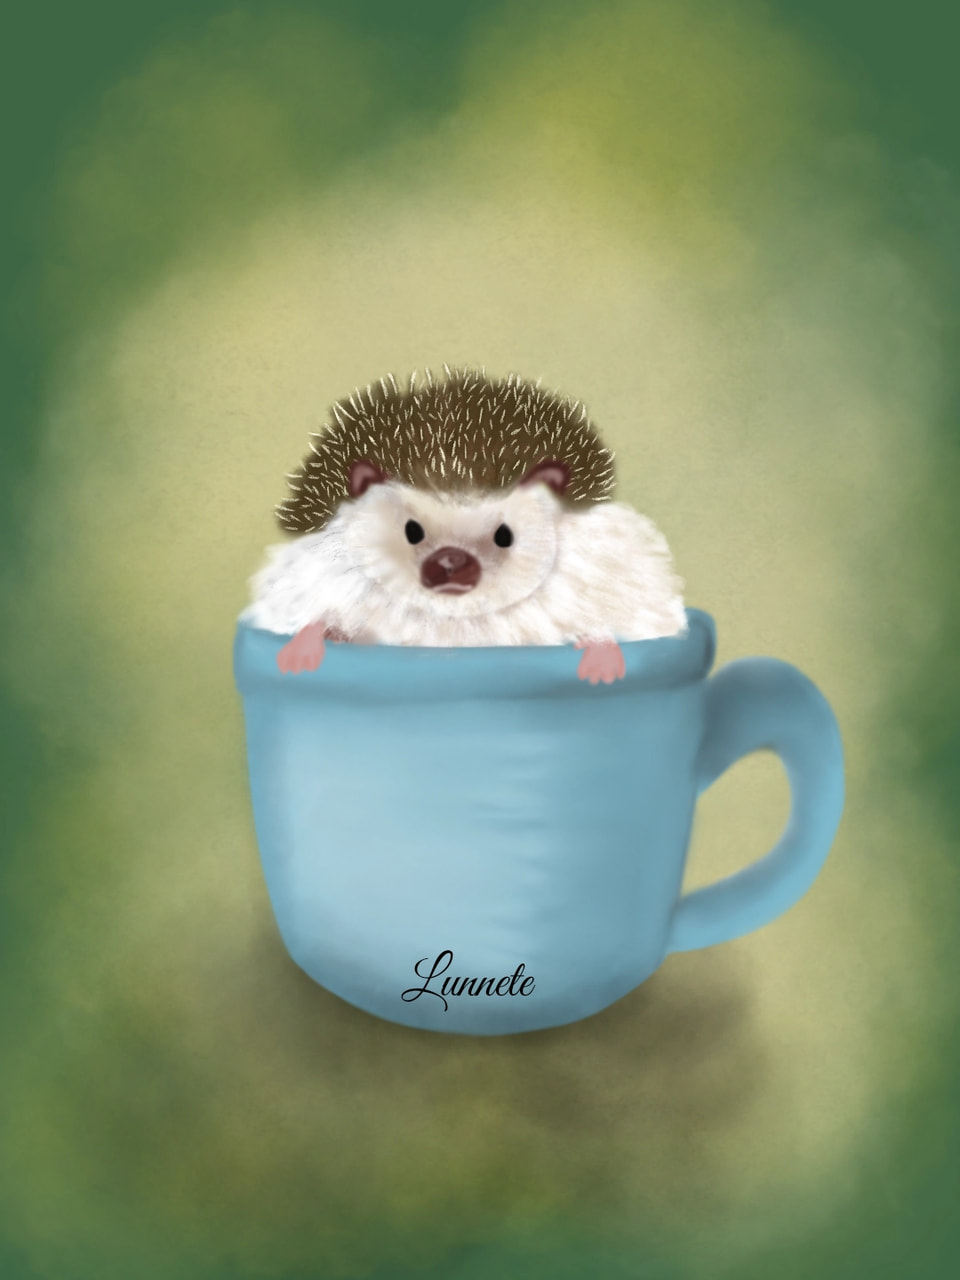 Day 25. Boo 👀 #inktober #inktober2018 #lunytober2018 #prickly #hedgehog #animal